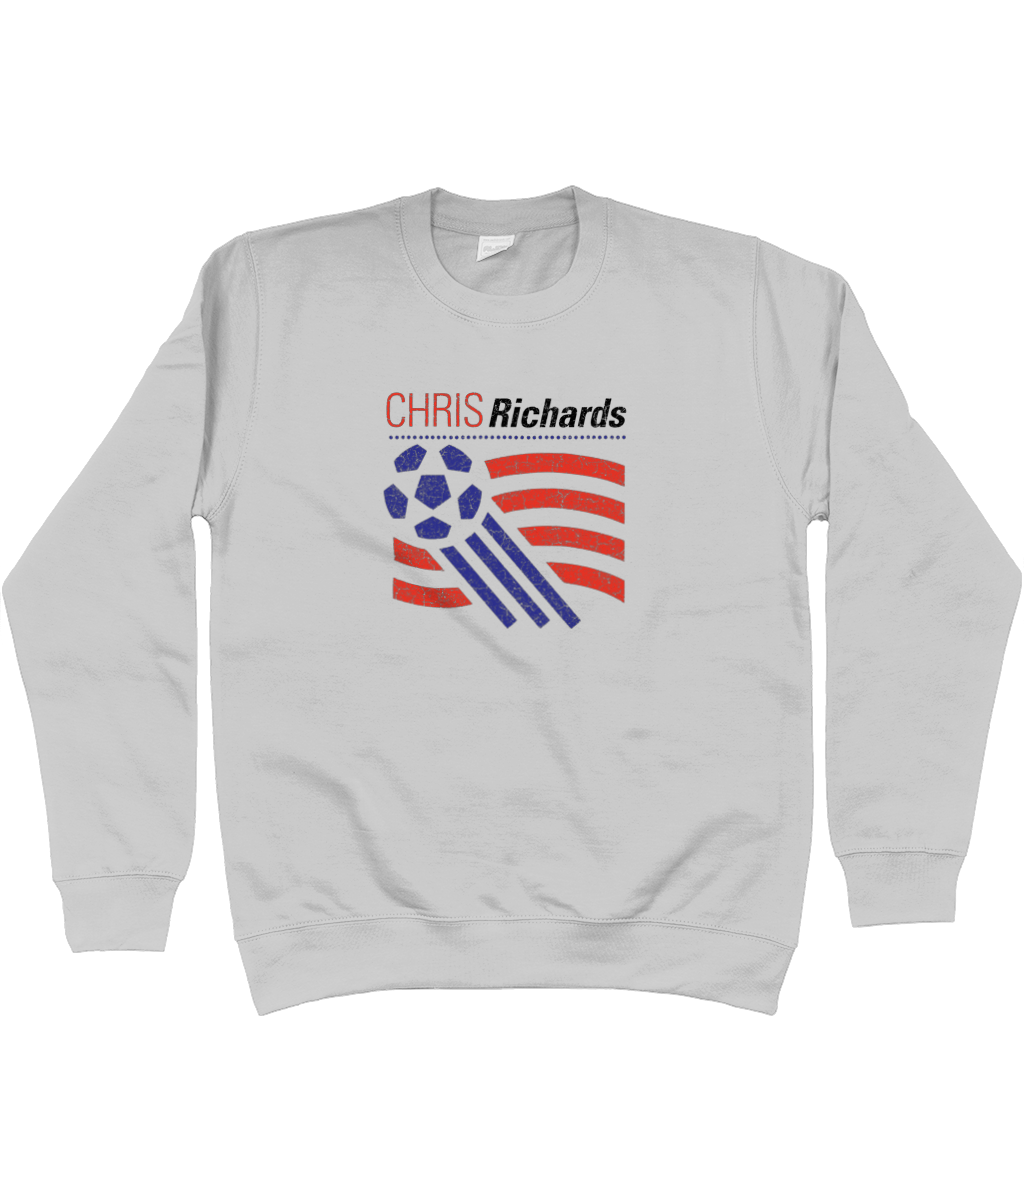 Chris Richards USA - Sweatshirt